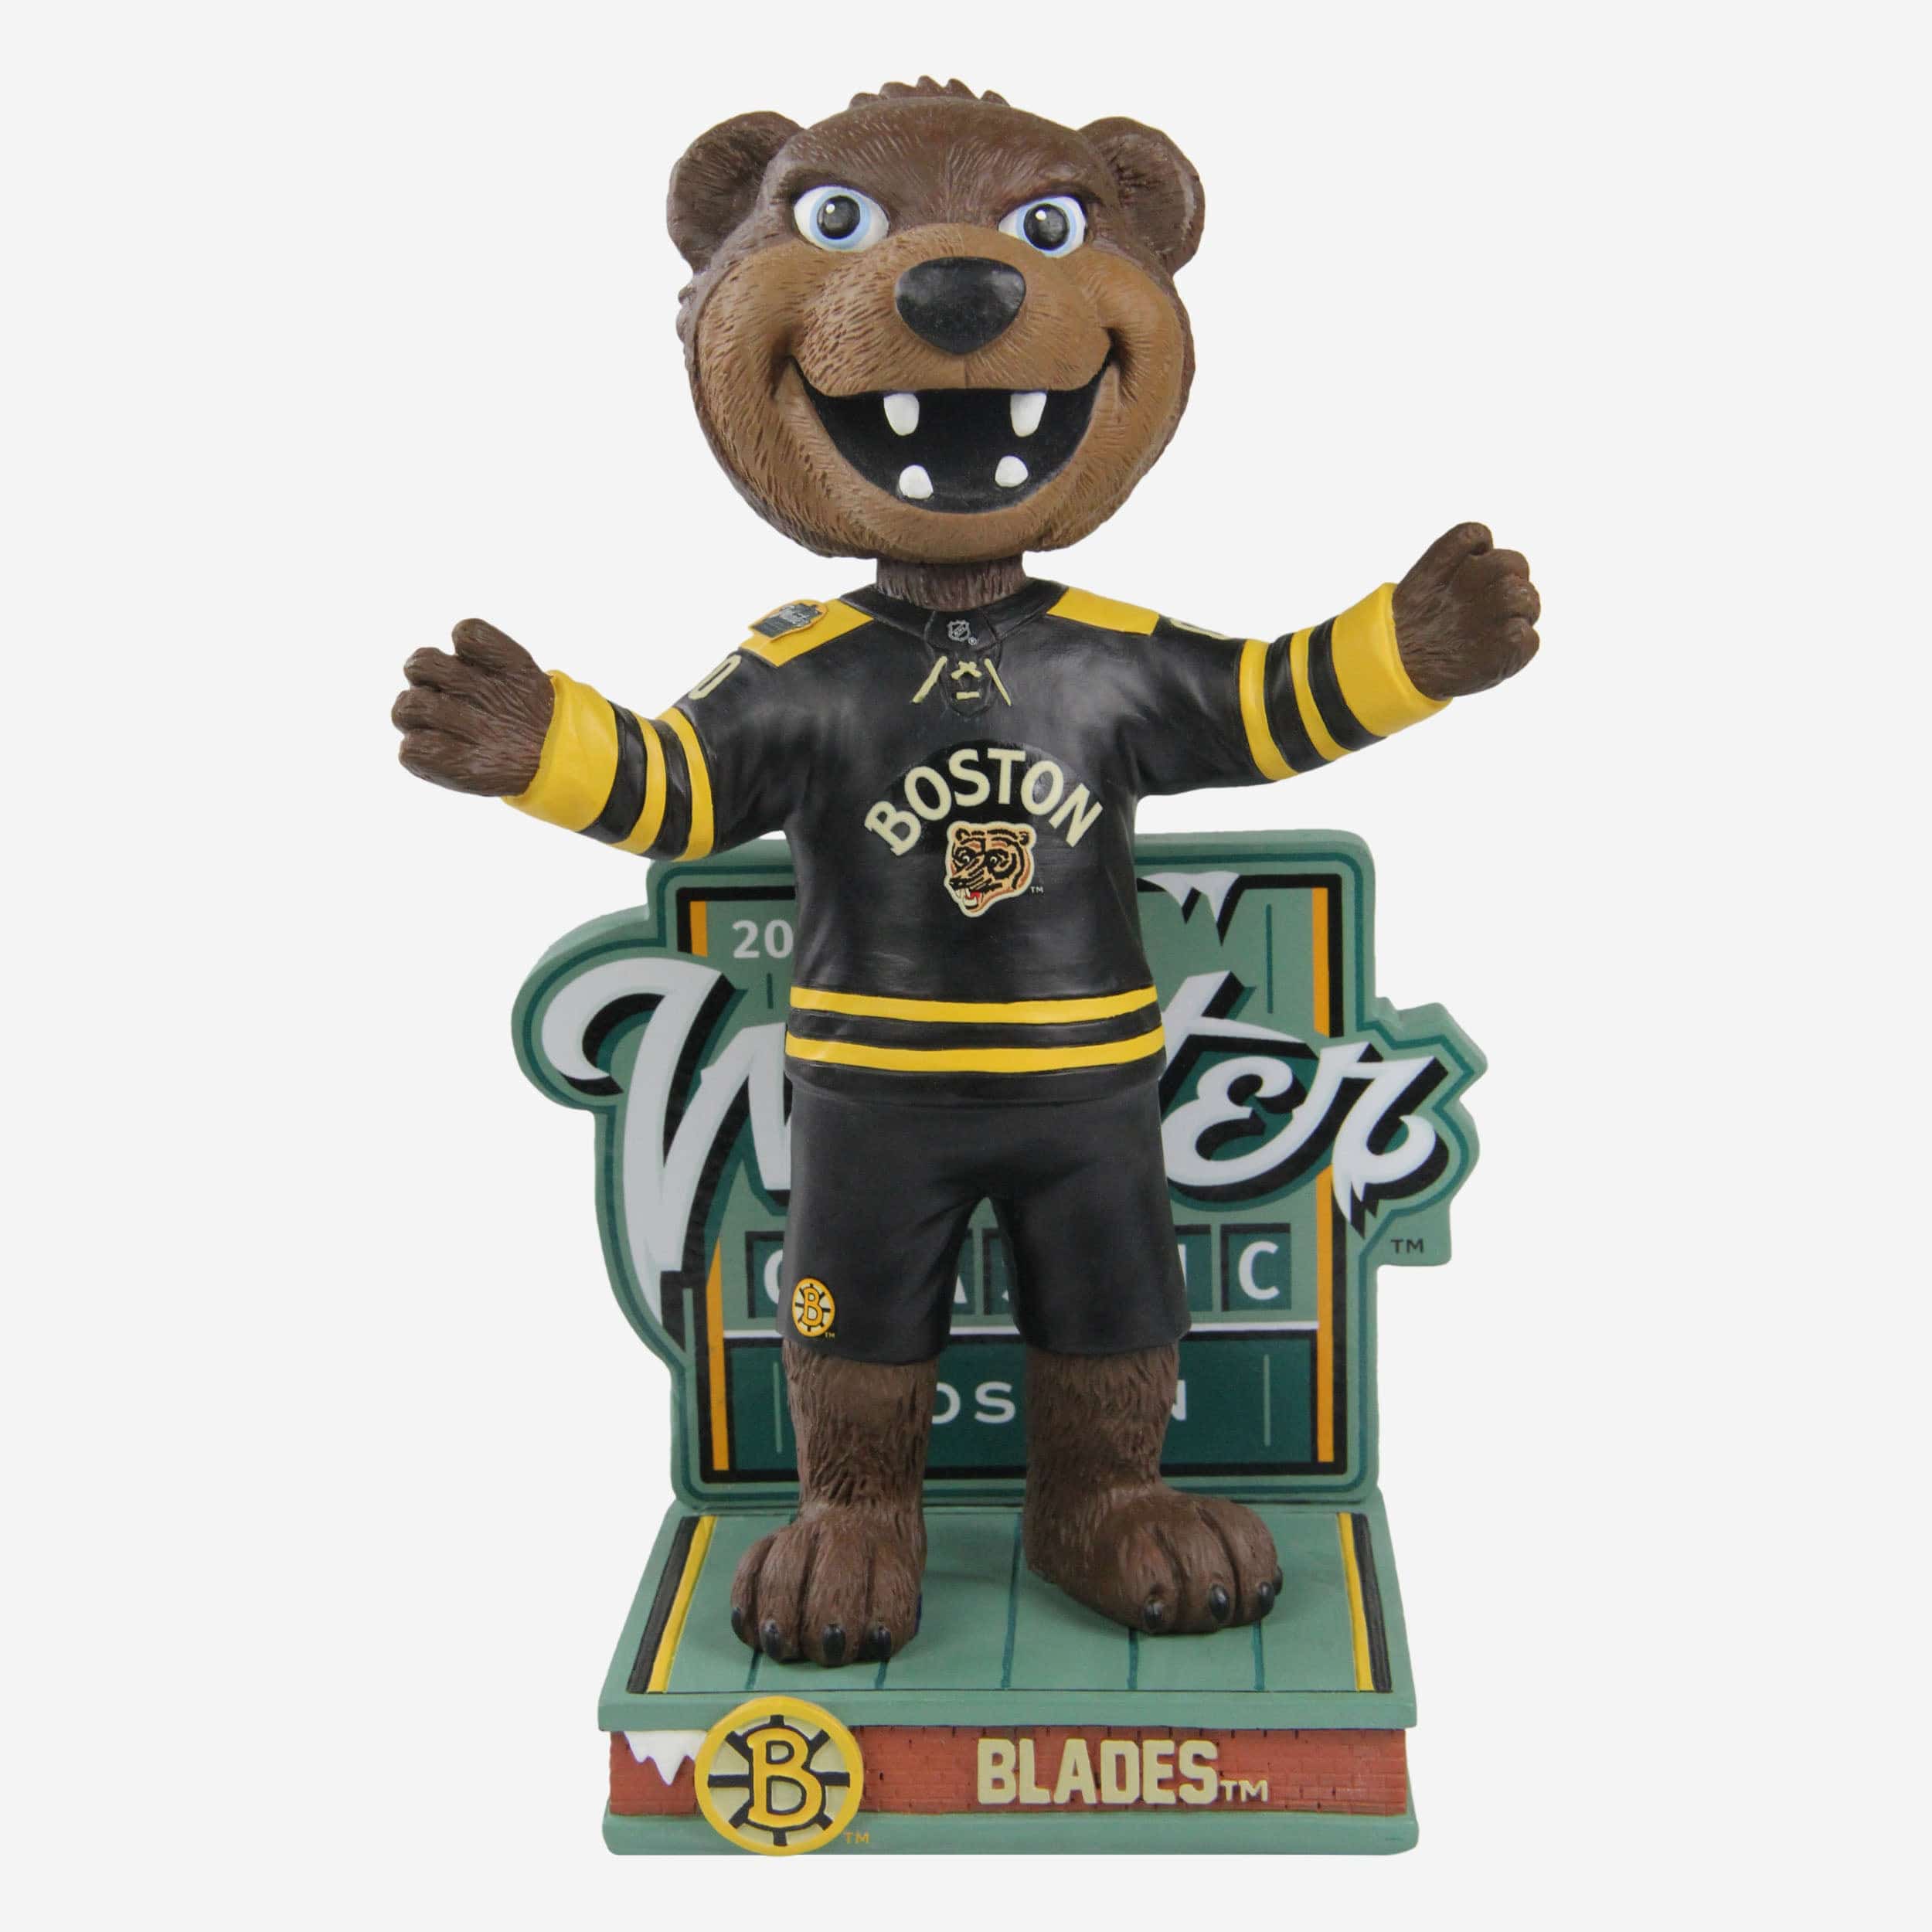 Funko Pop! NHL Mascots - Boston Bruins- Blades The Bear - in Pop